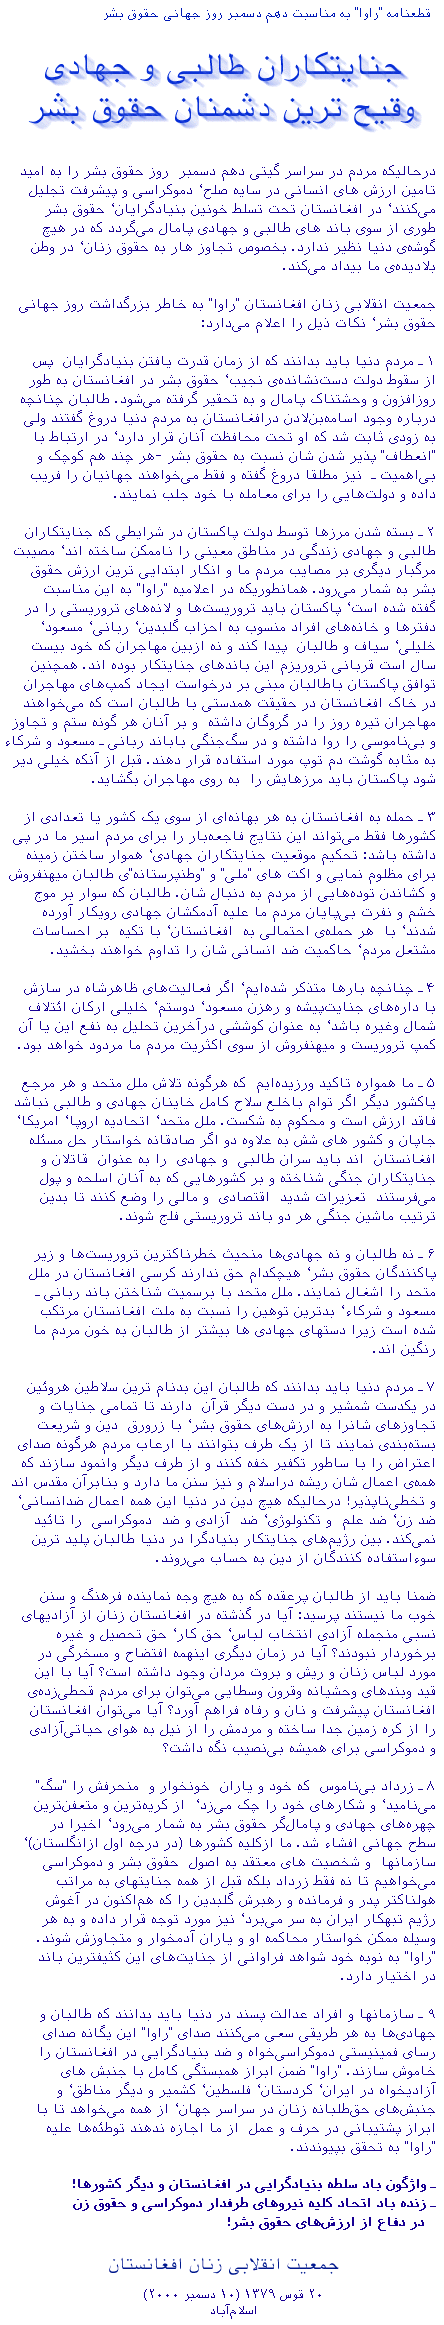 Resolution of RAWA on the International Human Rights Day, Dec.10,2000 (Farsi)            GIF Graphic file             Loading.... 